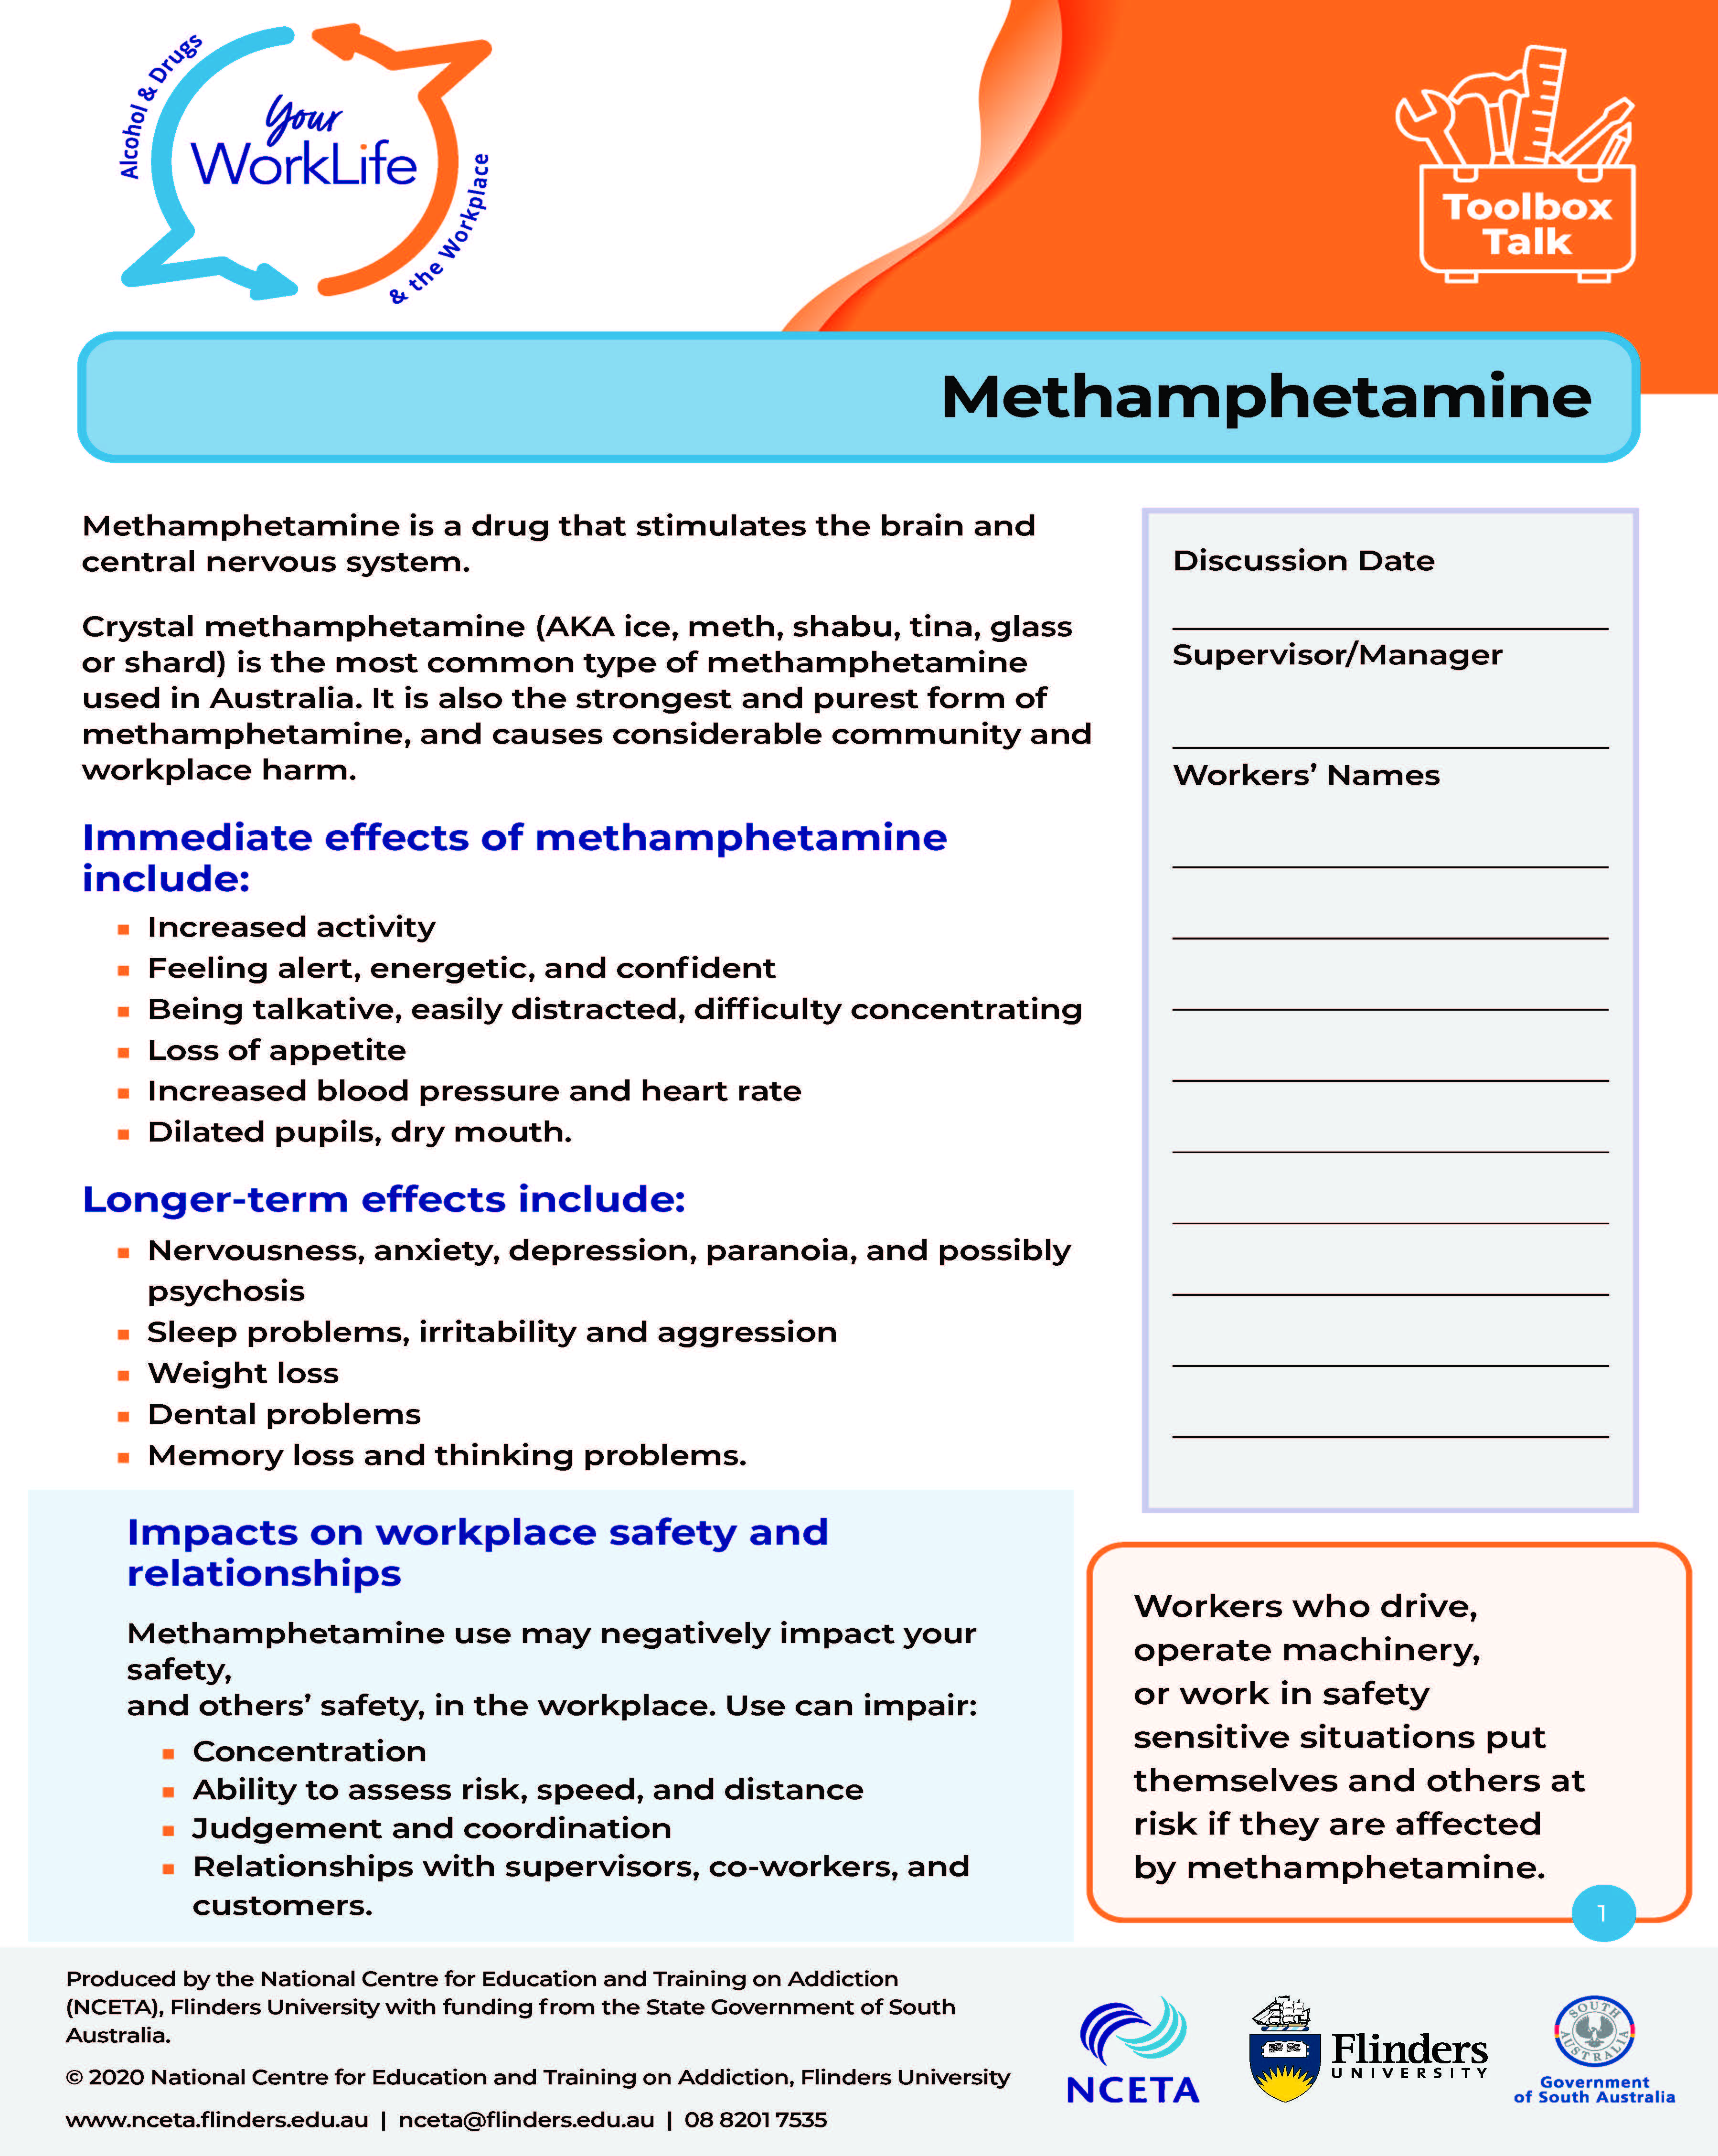 Front page-Toolbox-topic-Methamphetamine 20200505.jpg